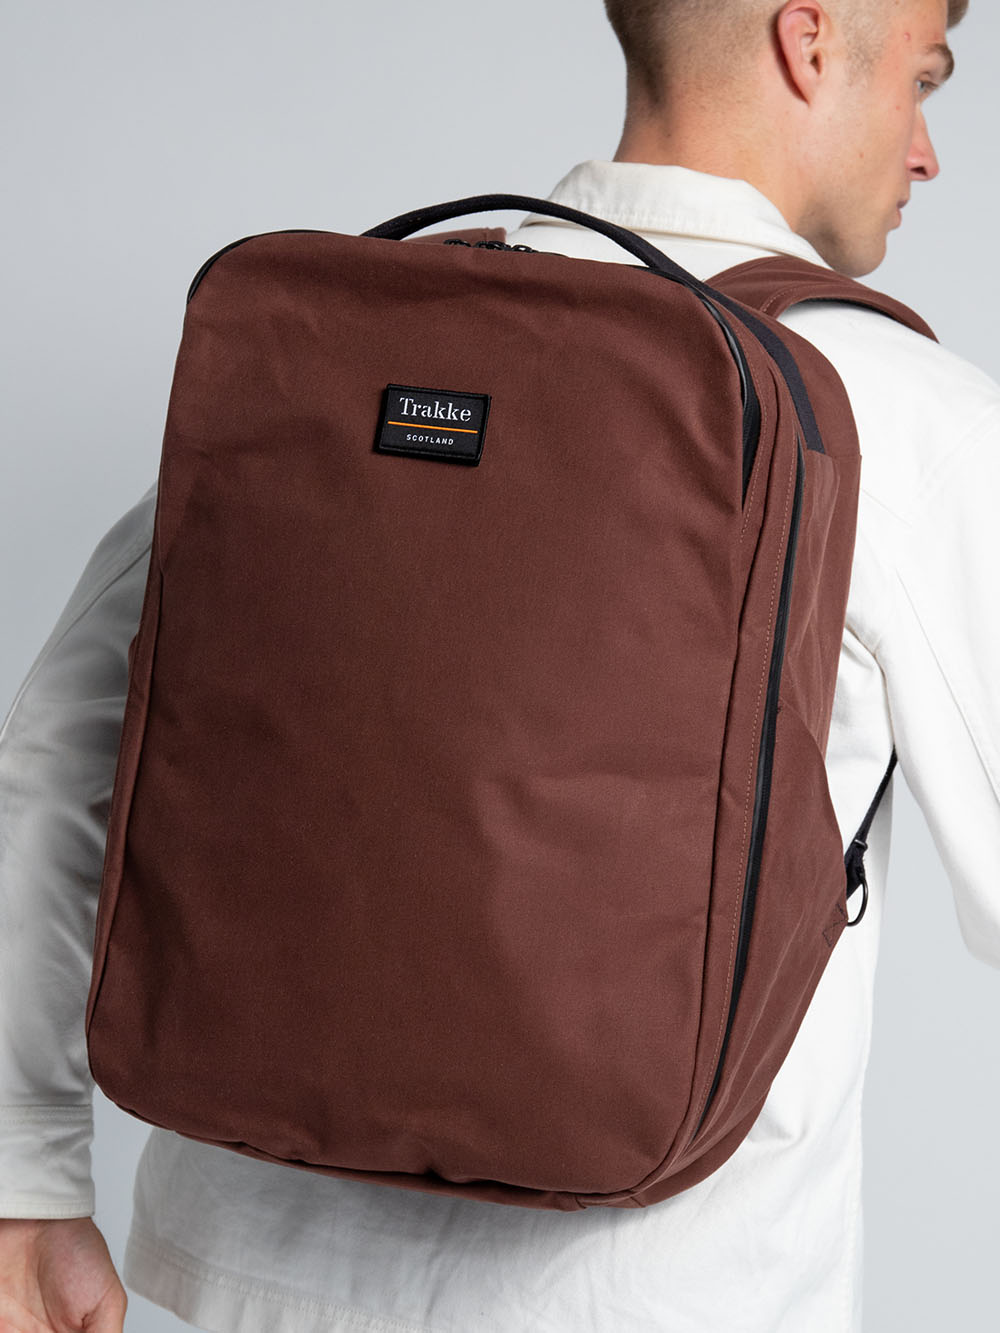 Waxed Canvas Backpack by Trakke | Backpacks, Bags, Waxed canvas backpack